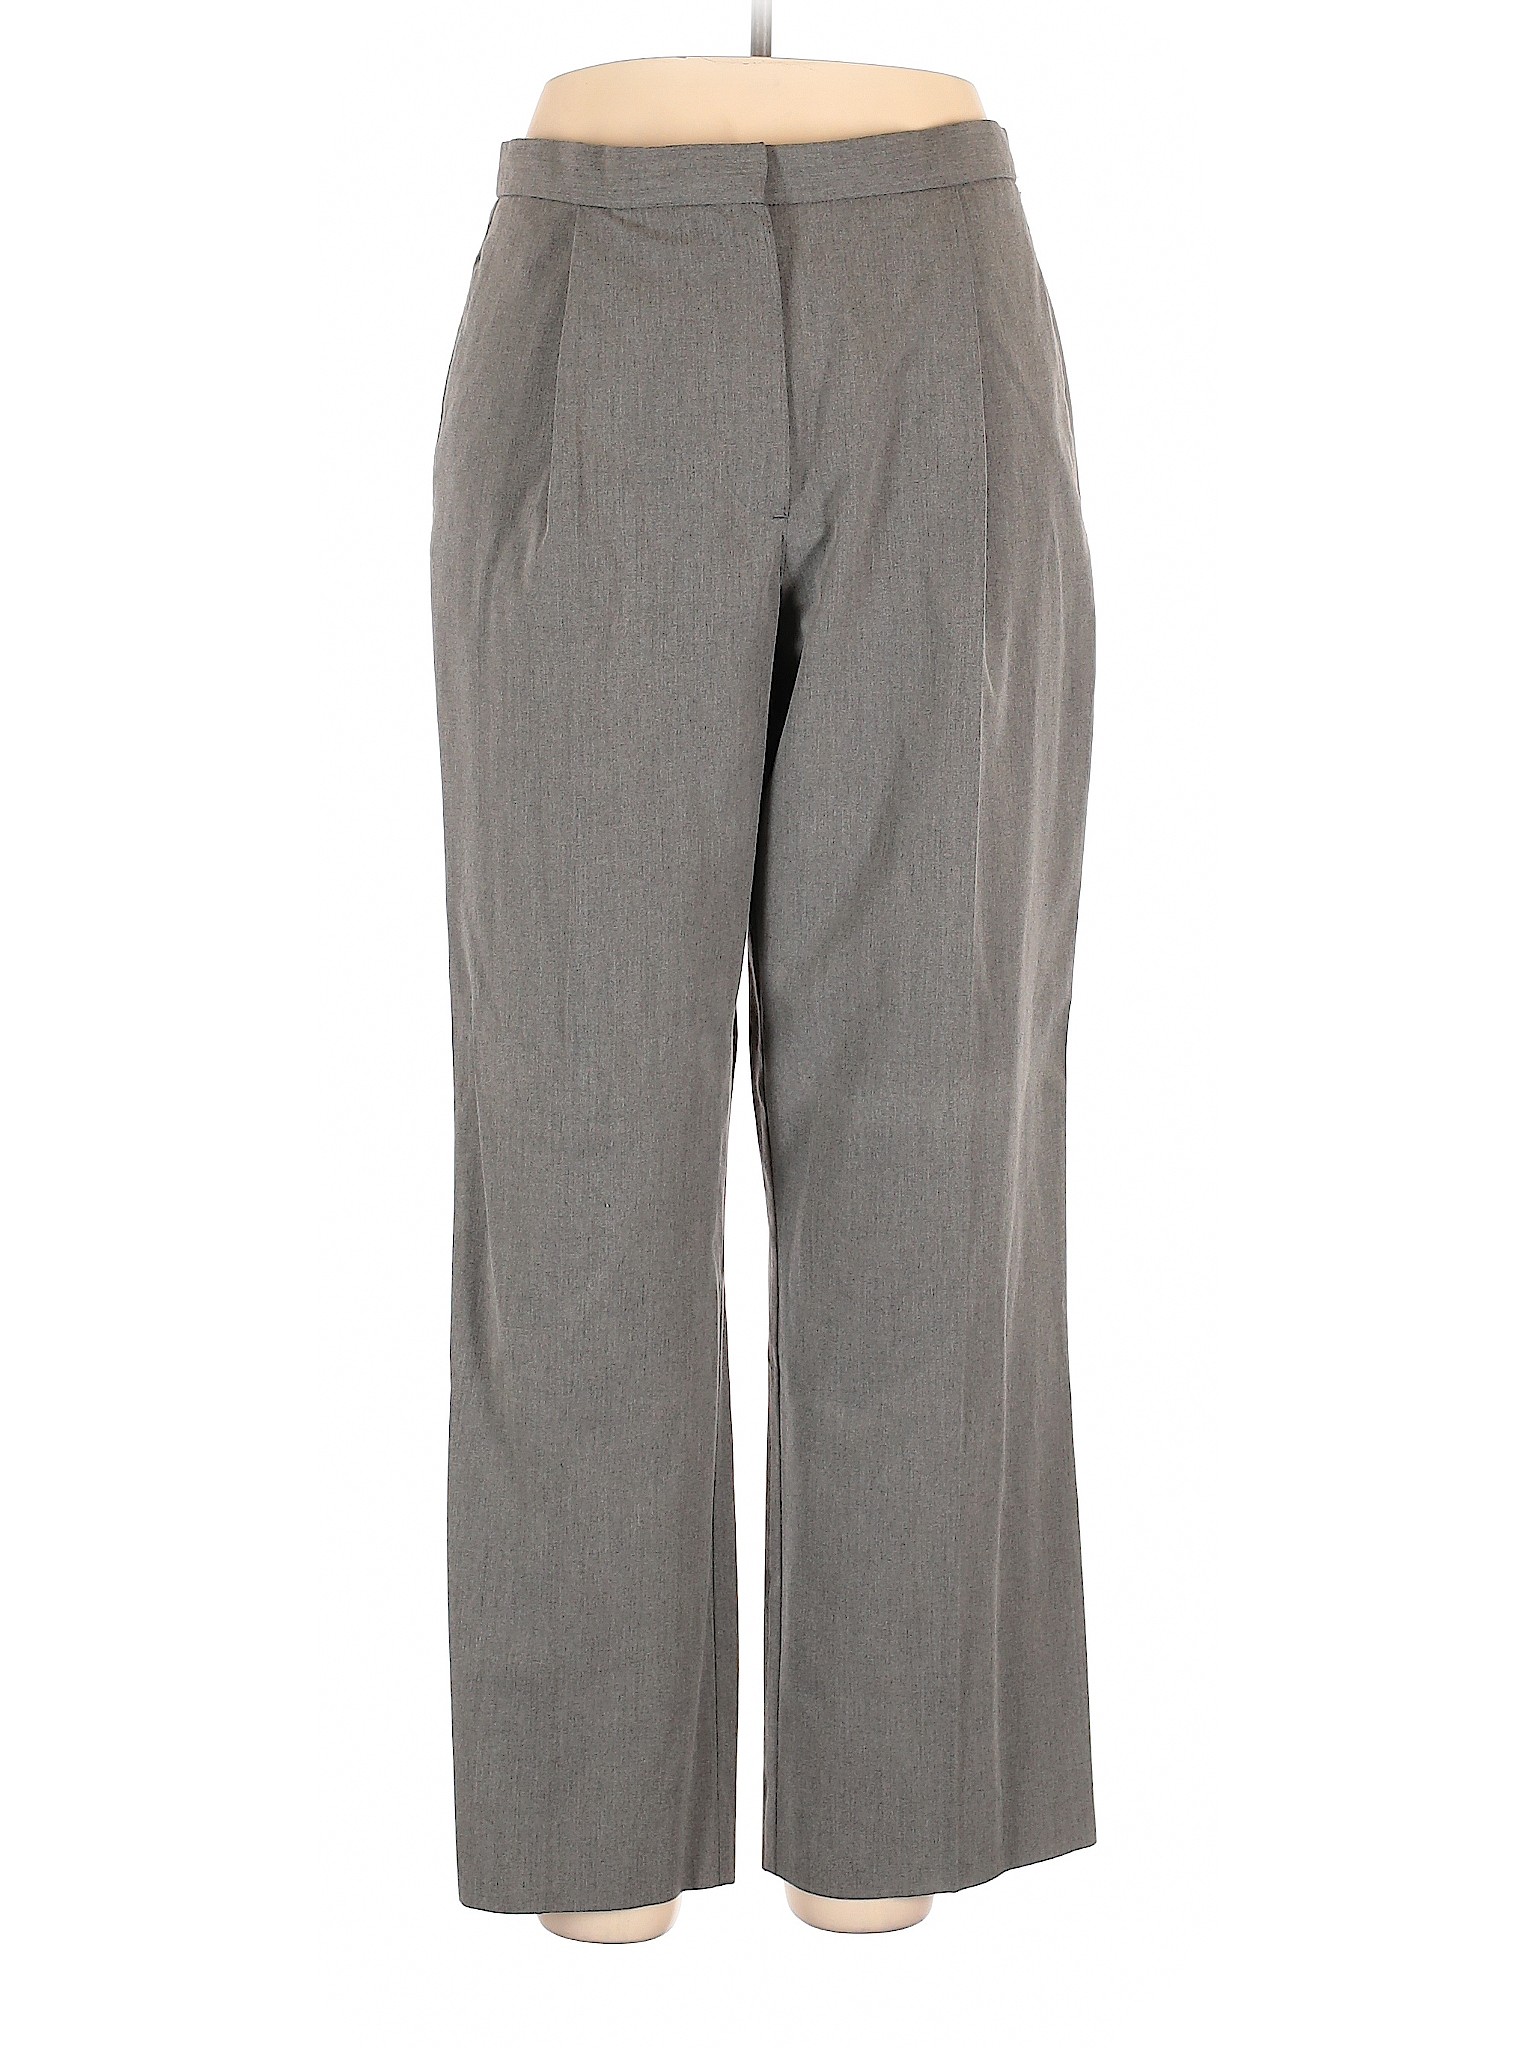 Liz Claiborne Women Gray Dress Pants 14 Petites | eBay